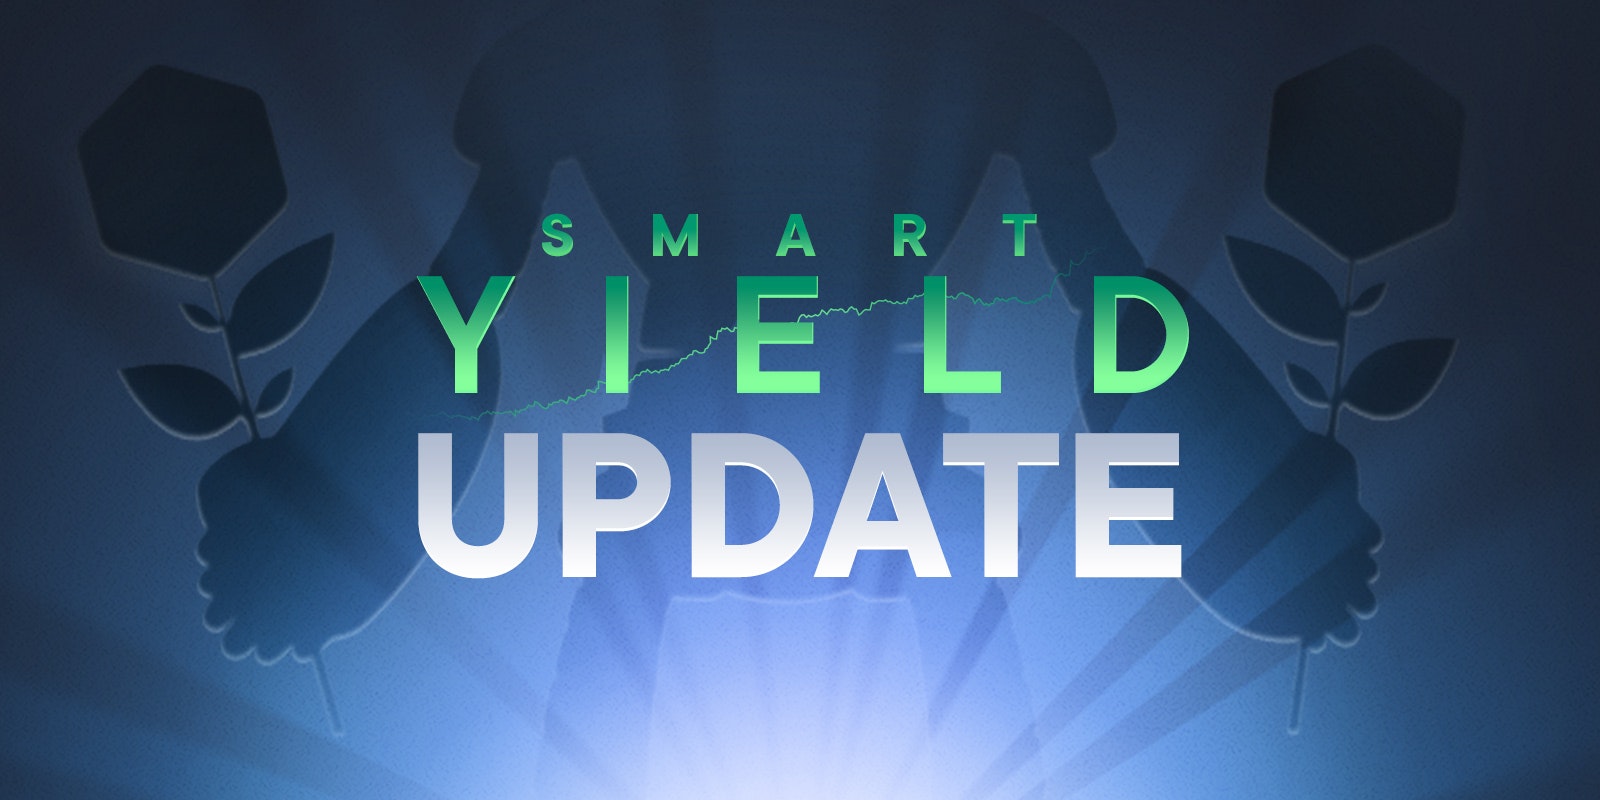 Smart Yield strategy update